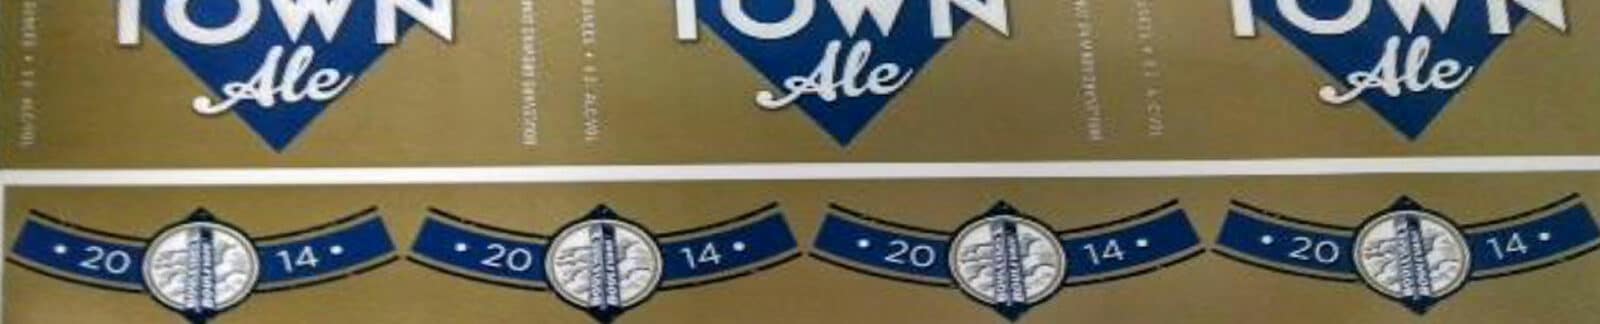 Crown Town Ale header